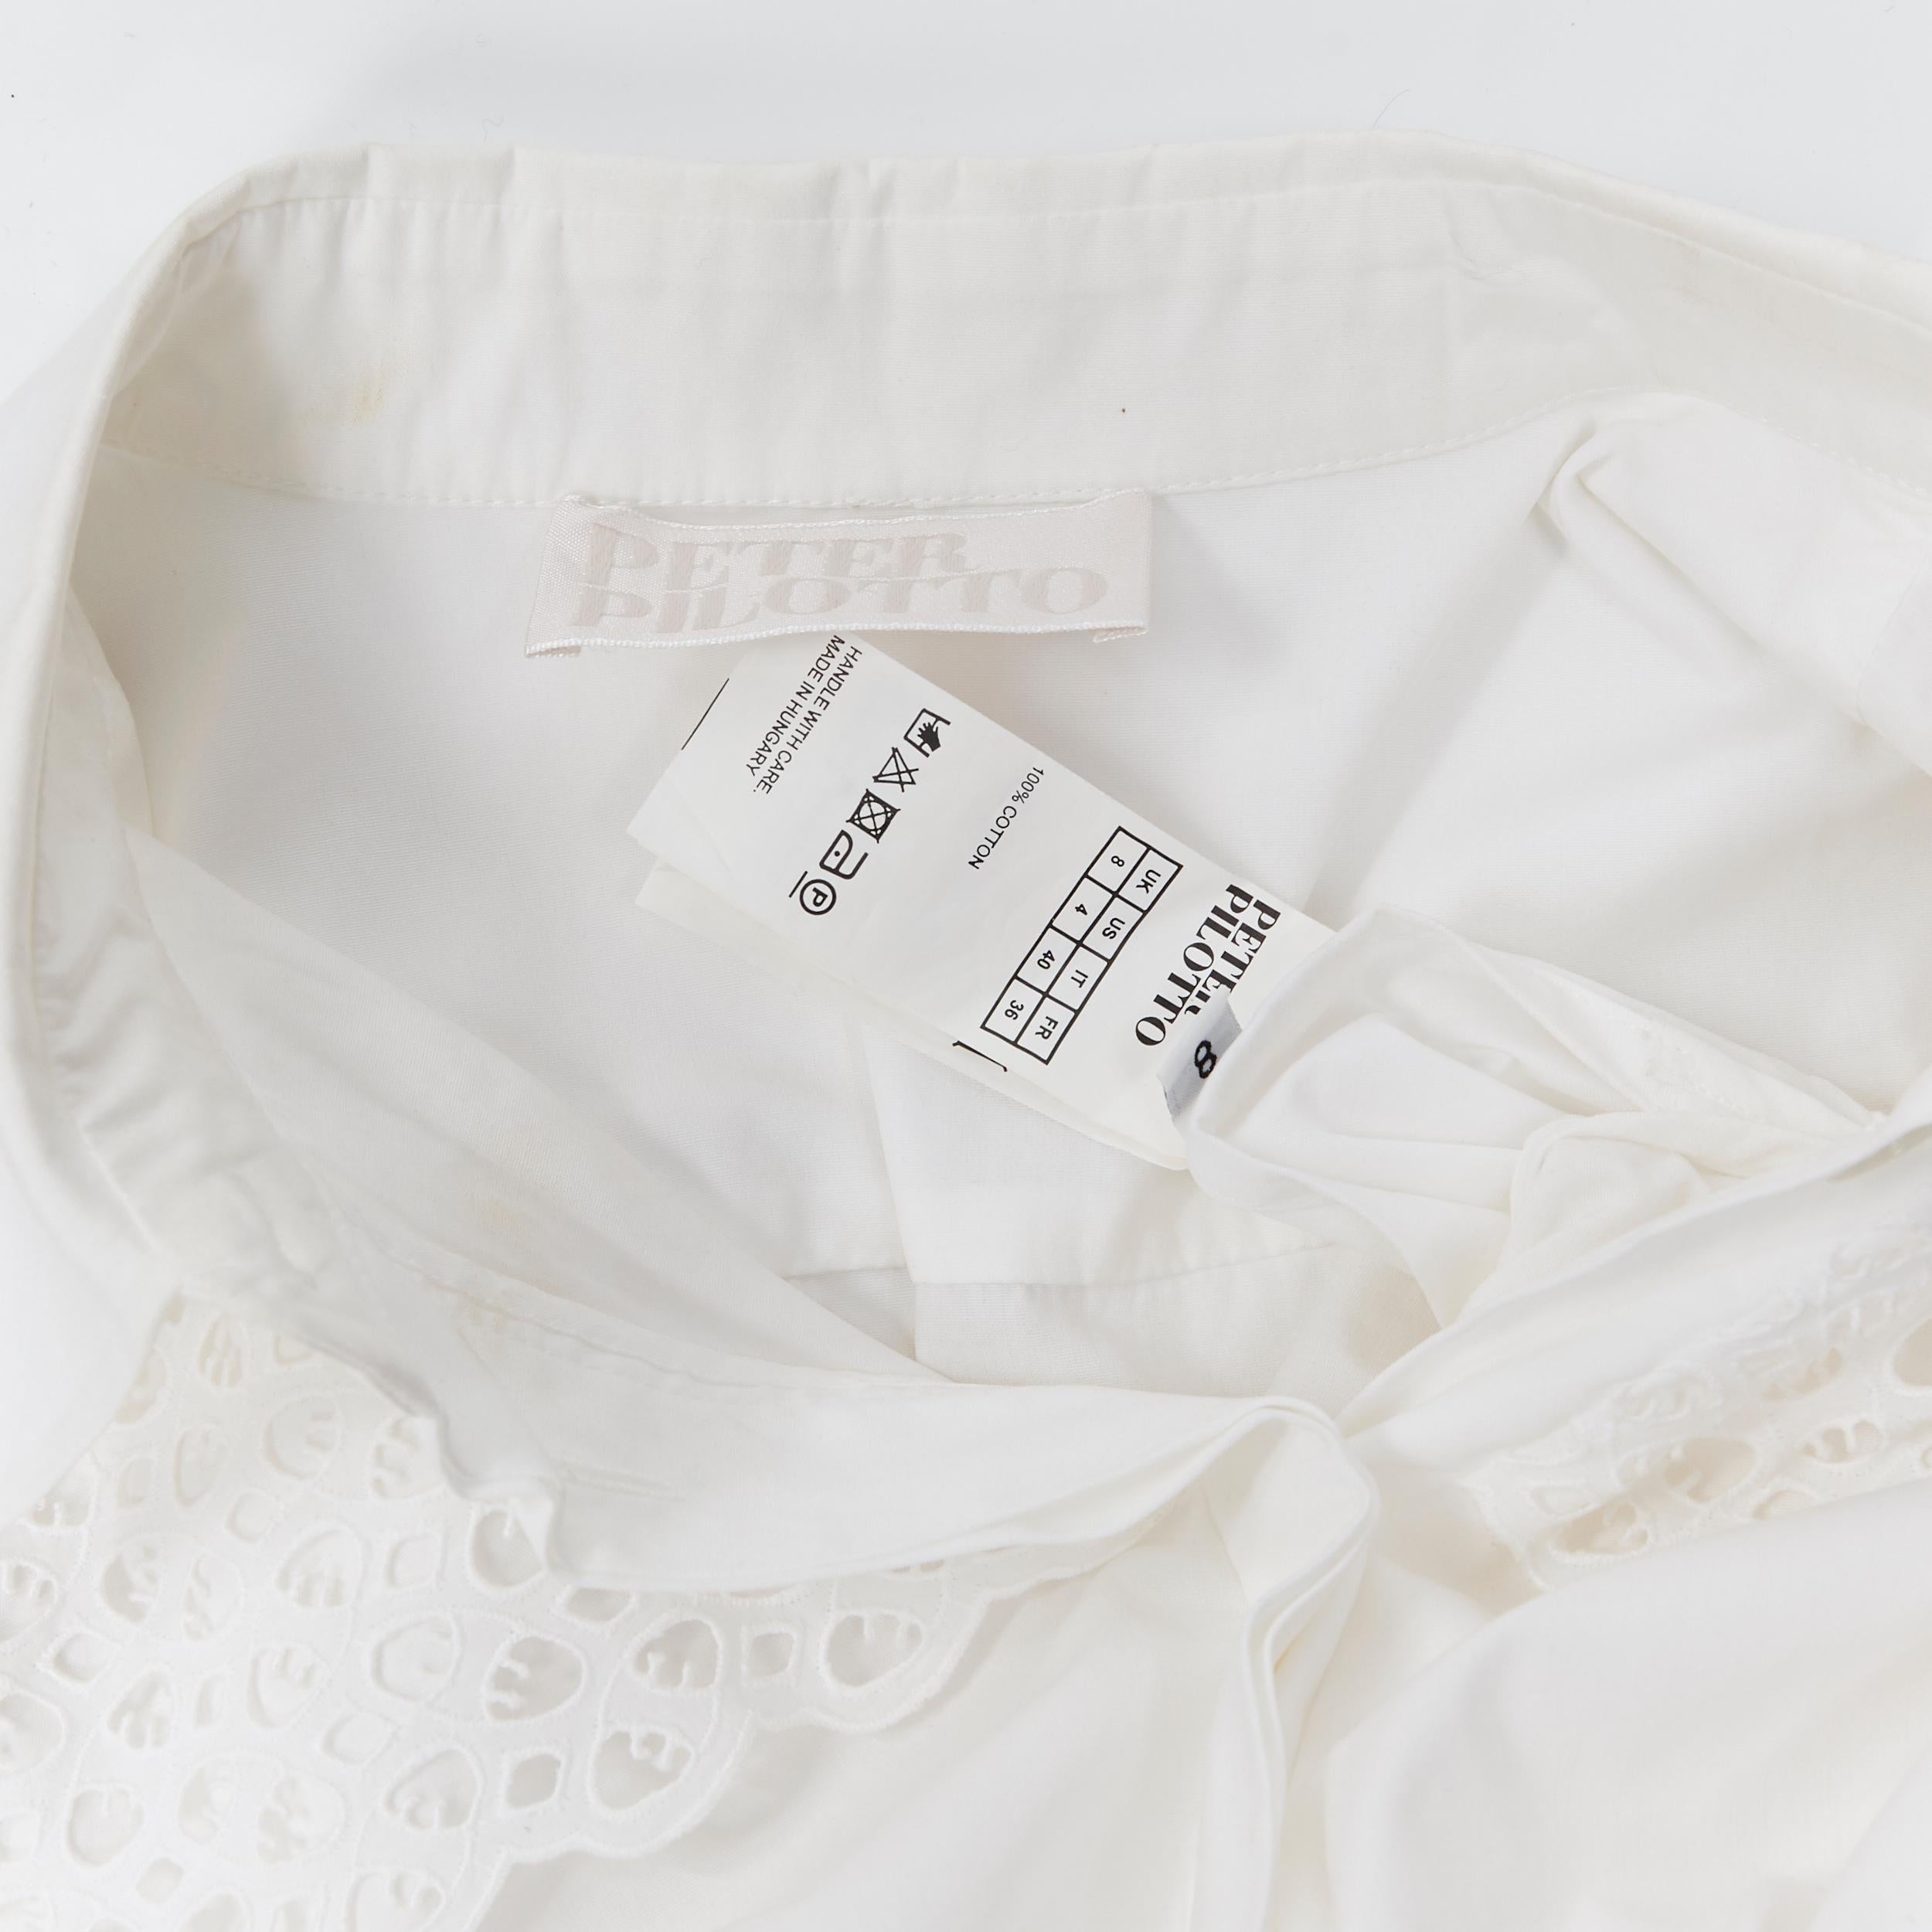 PETER PILOTTO white cotton embroidery anglais paneled panel sleeveless shirt S 4